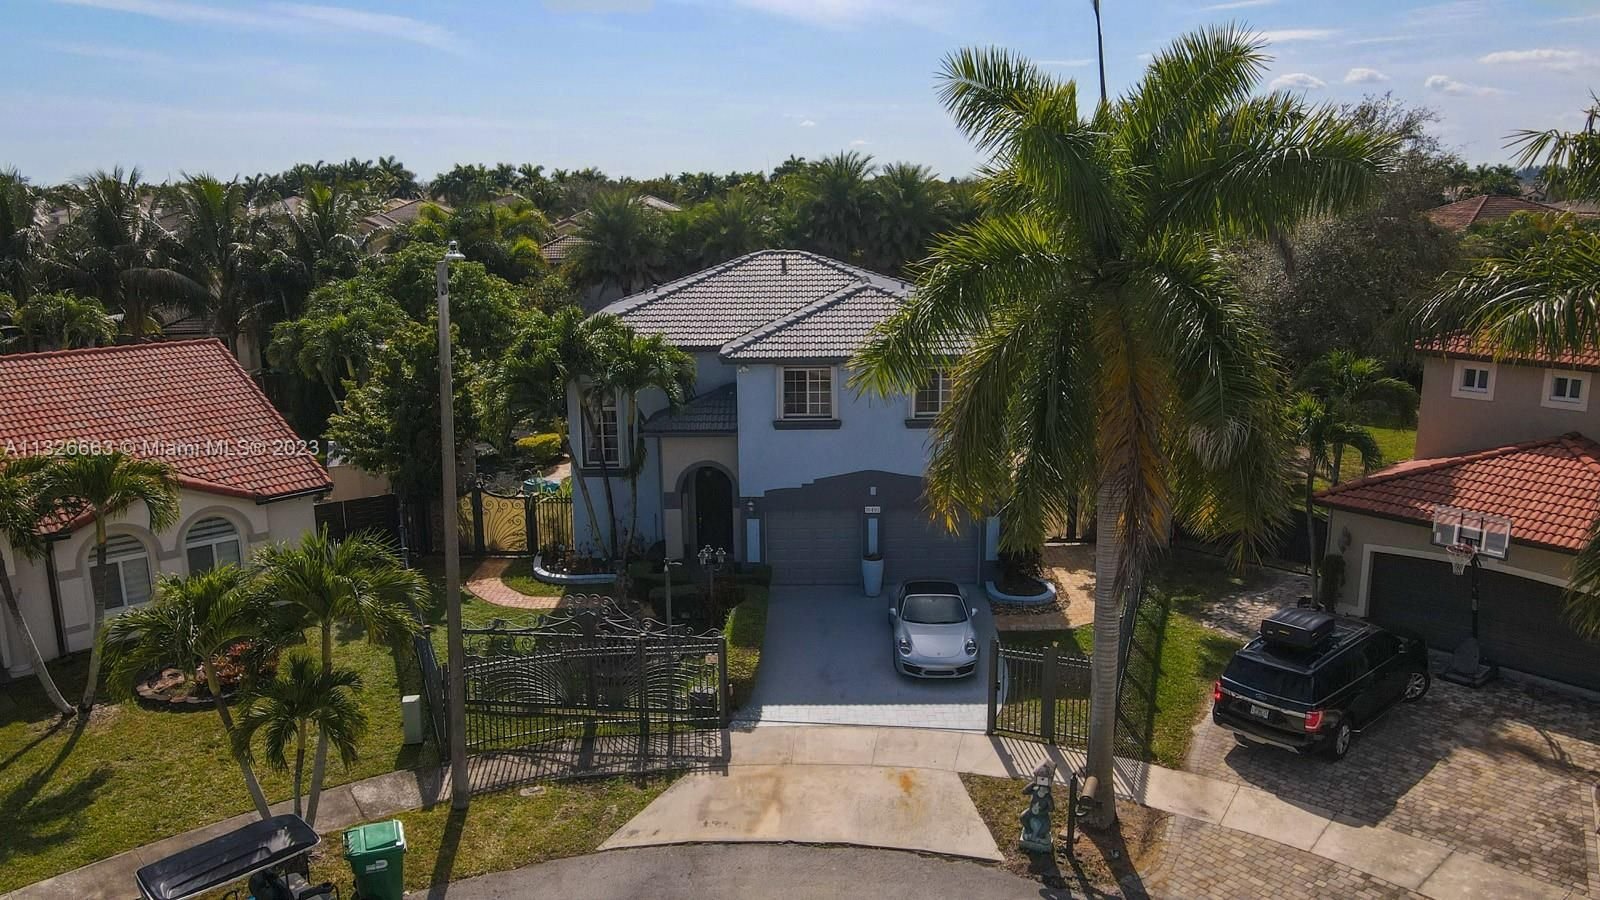 Real estate property located at 16492 56th Ter, Miami-Dade County, Miami, FL